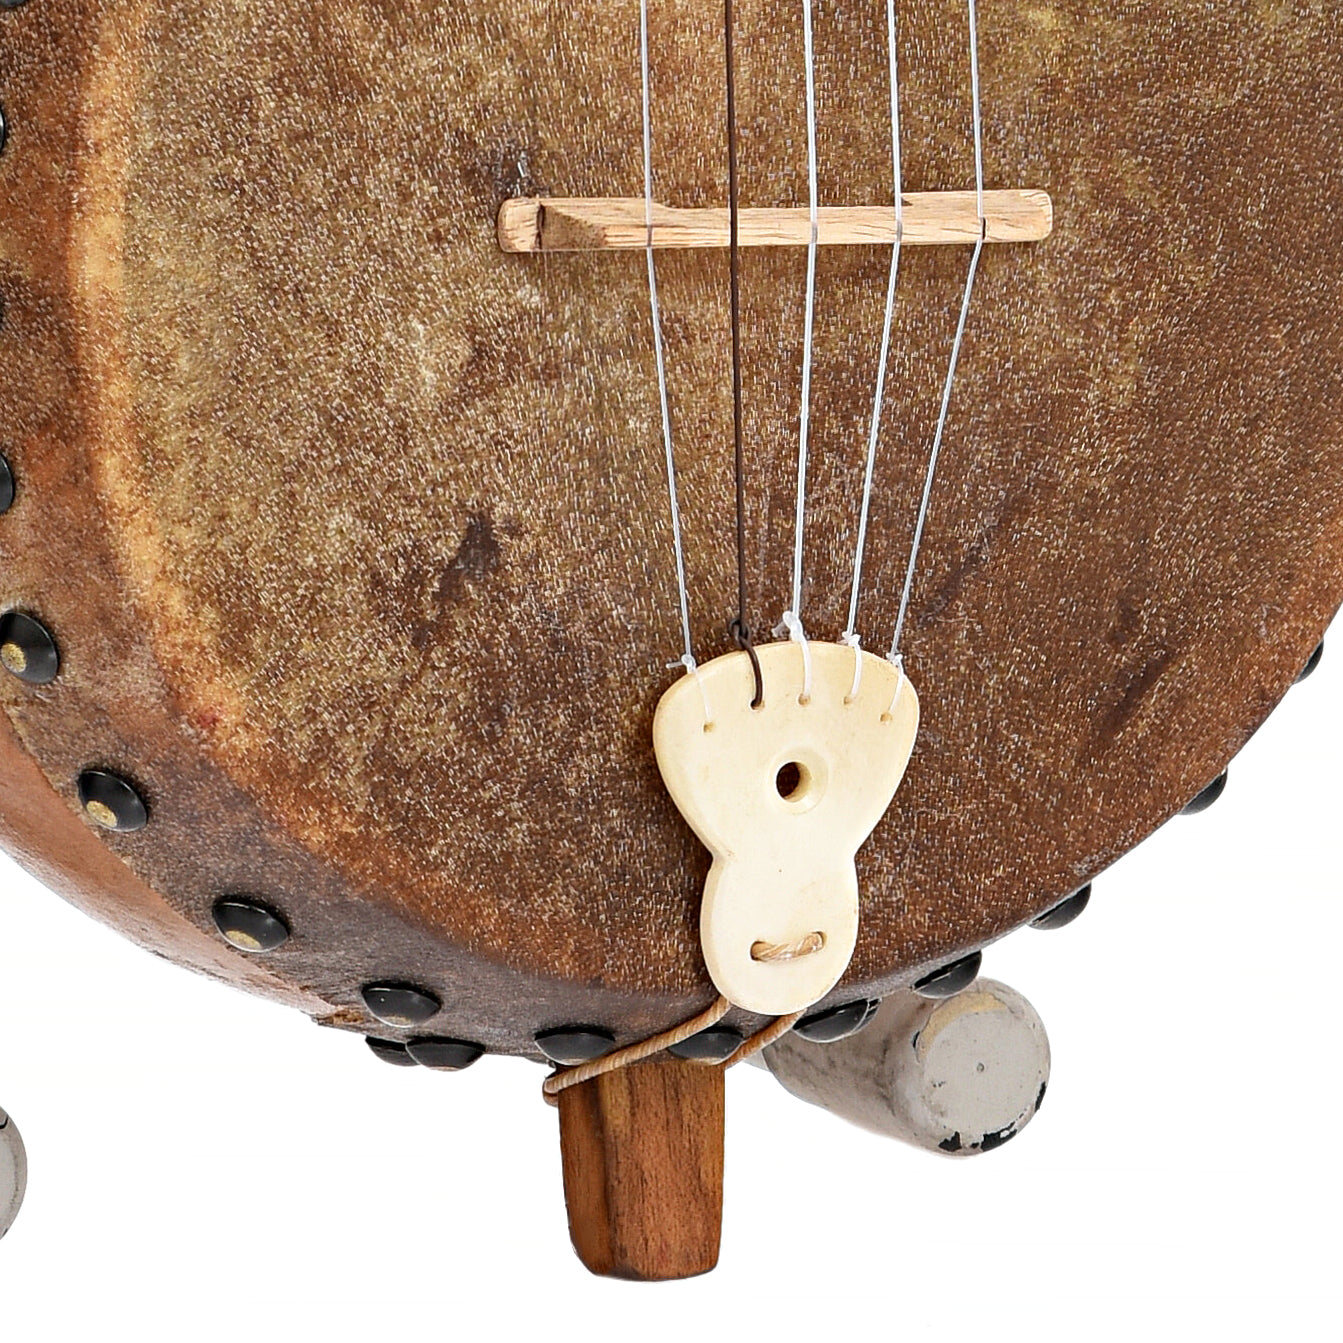 Tailpiece and bridge of Menzies Fretless Gourd Banjo #579